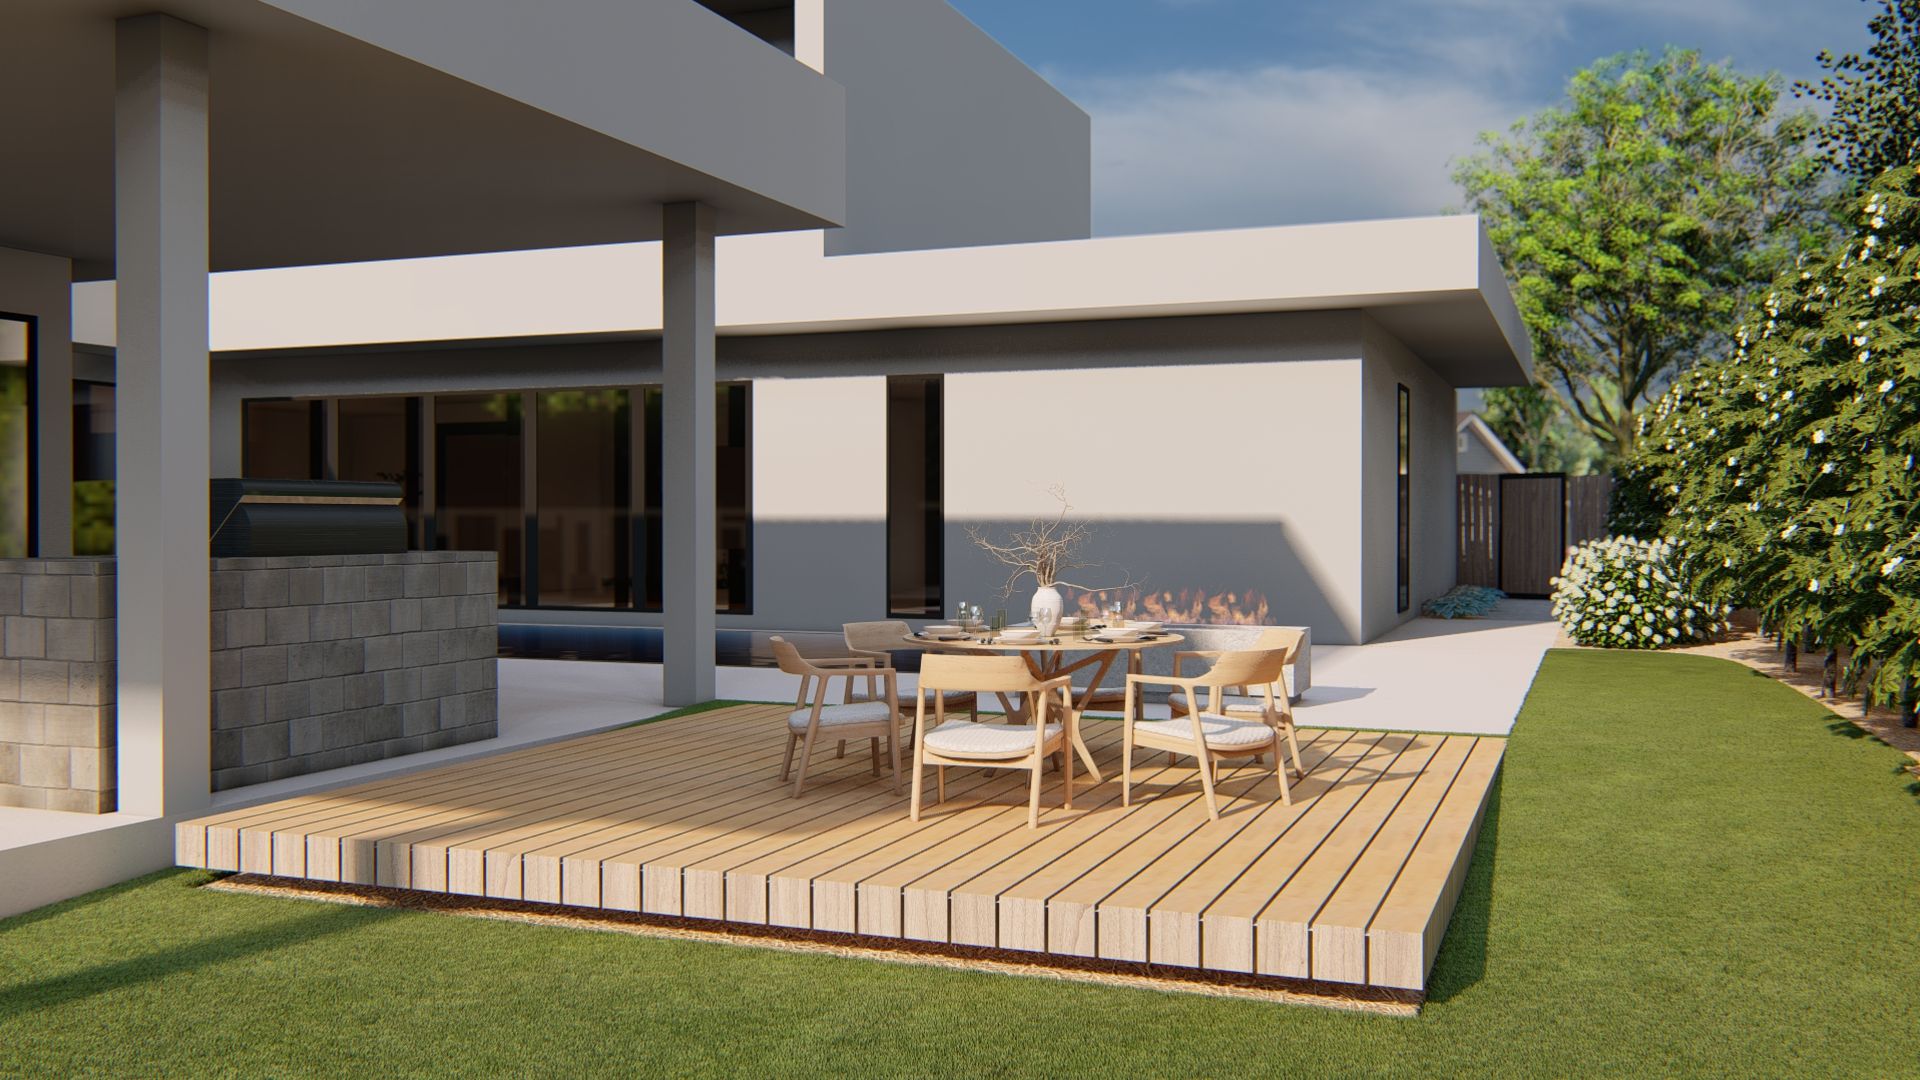 a deck patio with a wooden decks off a concrete patio